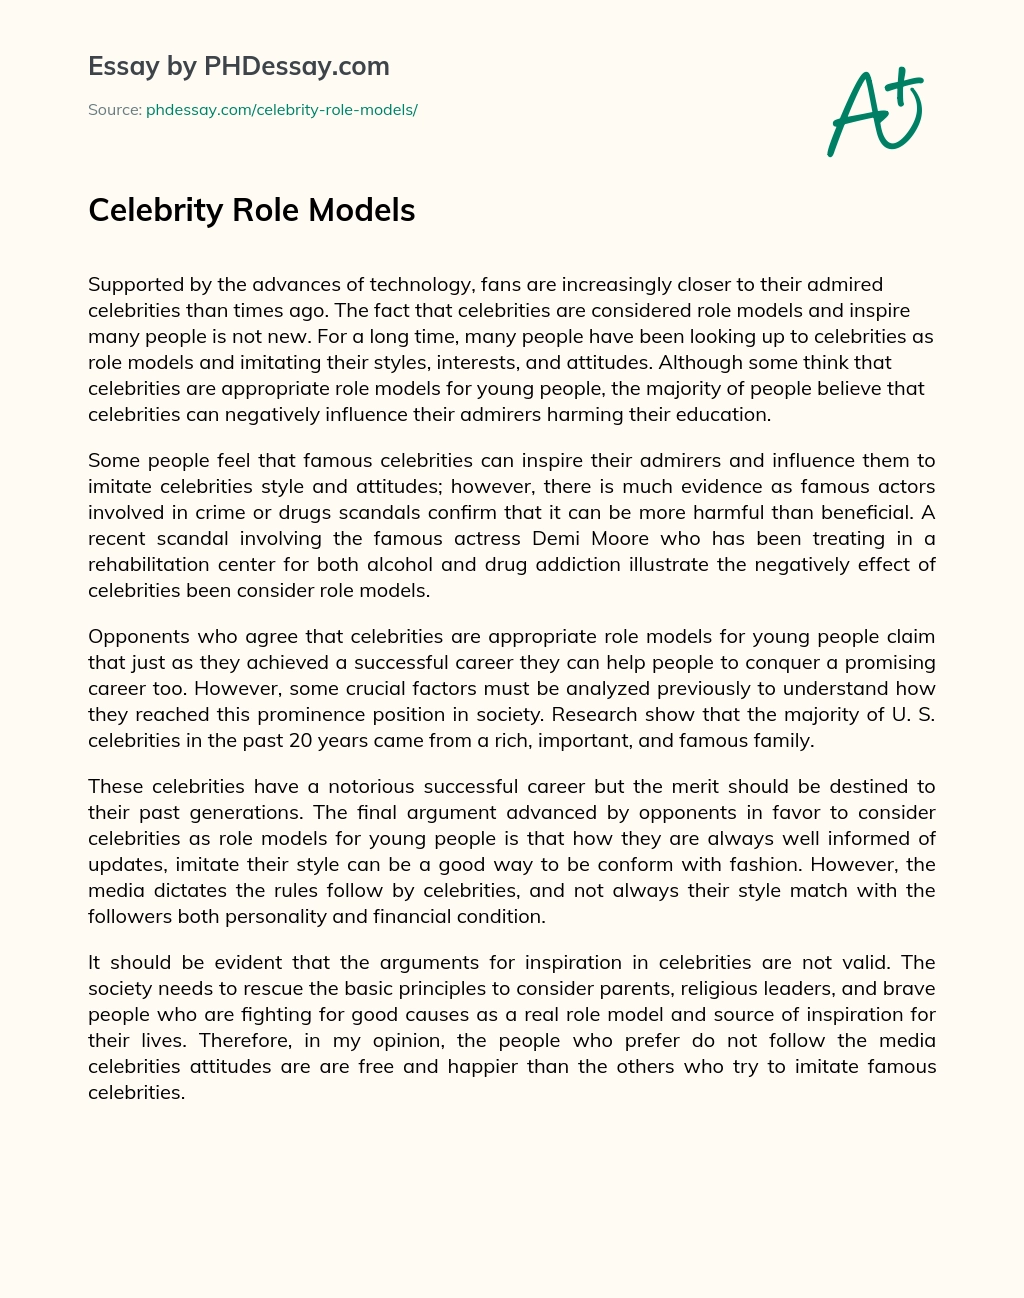 Celebrity Role Models essay